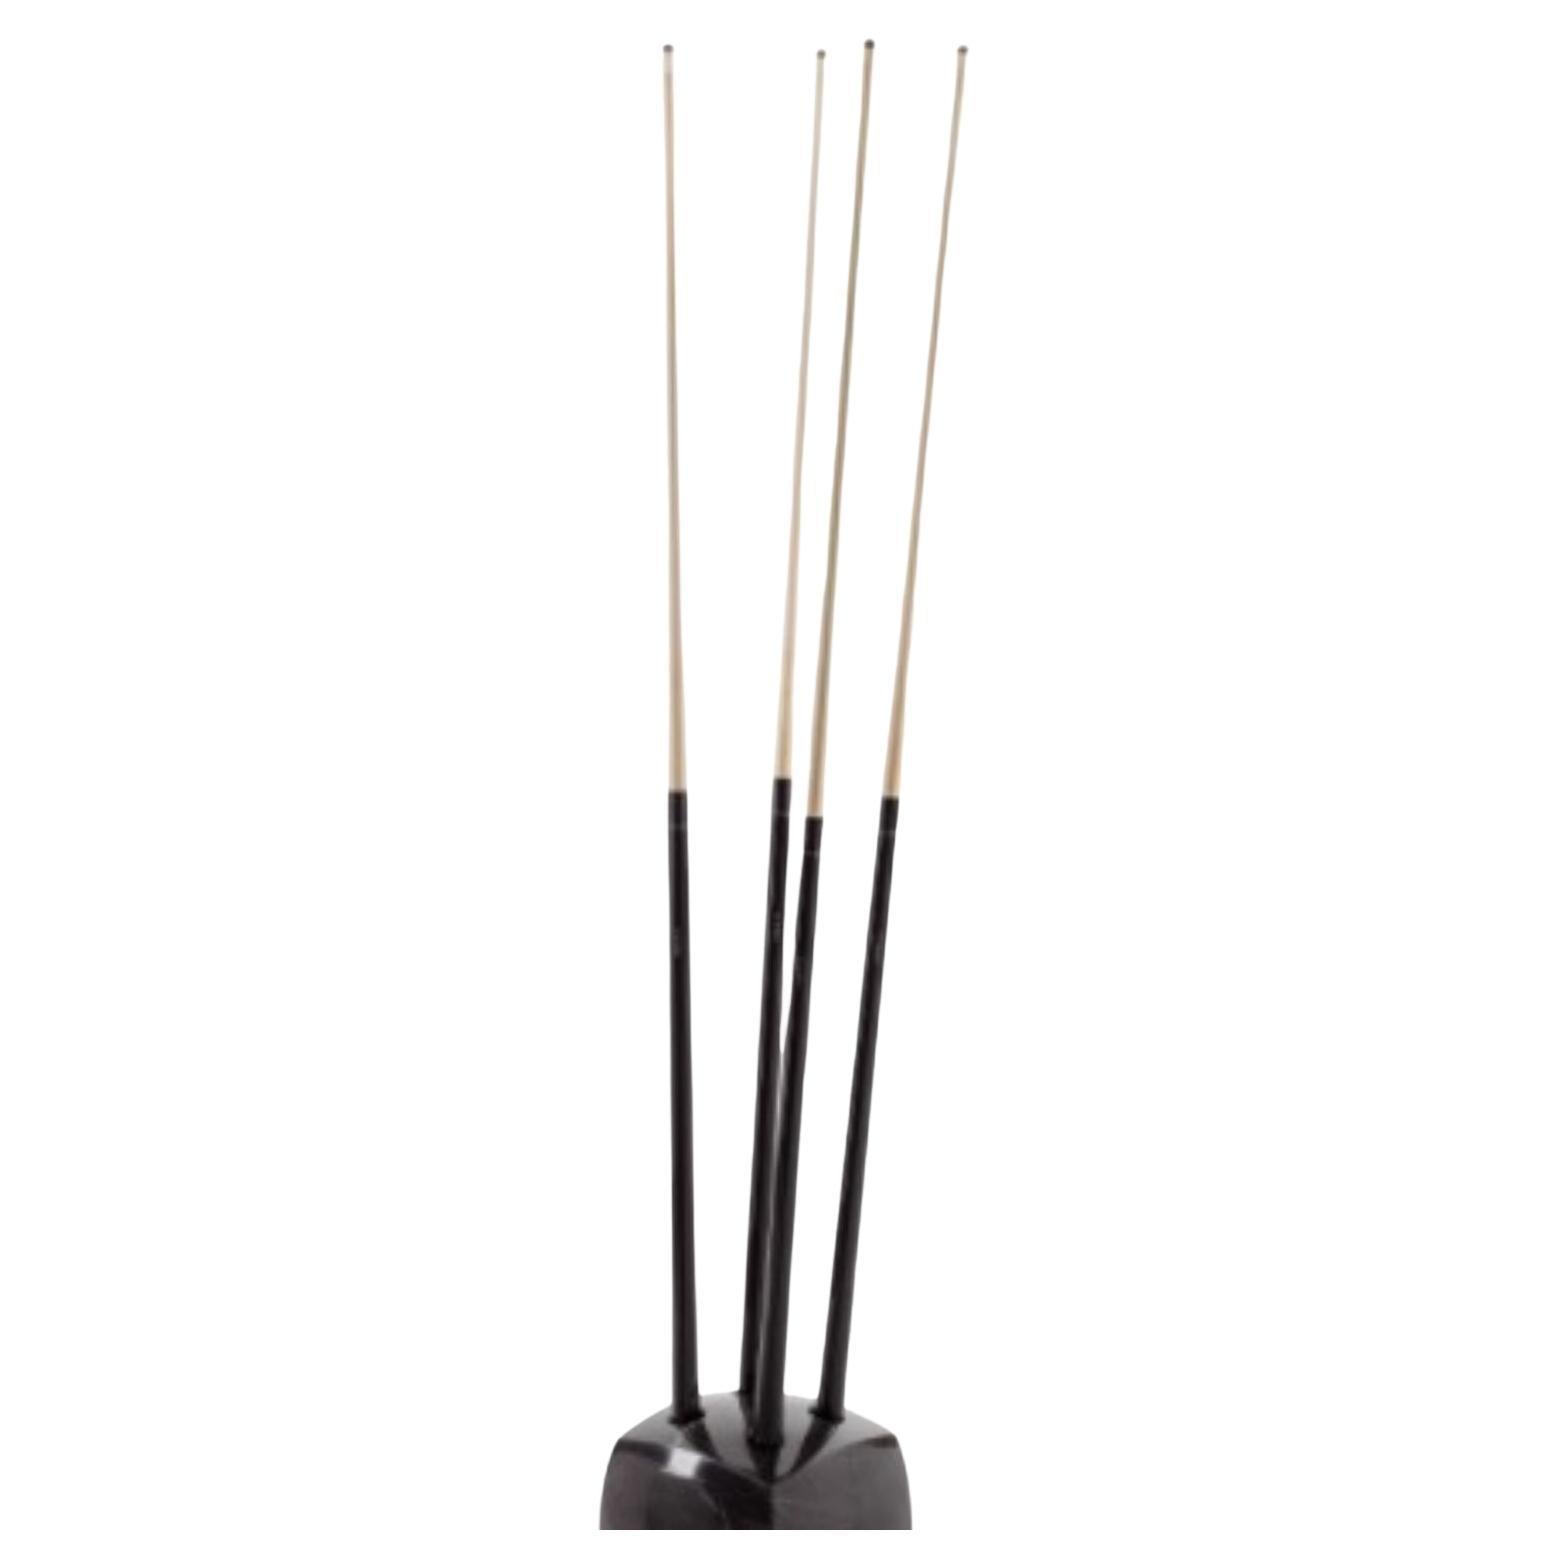 Set of 4 Longoni Cue Sticks by Impatia